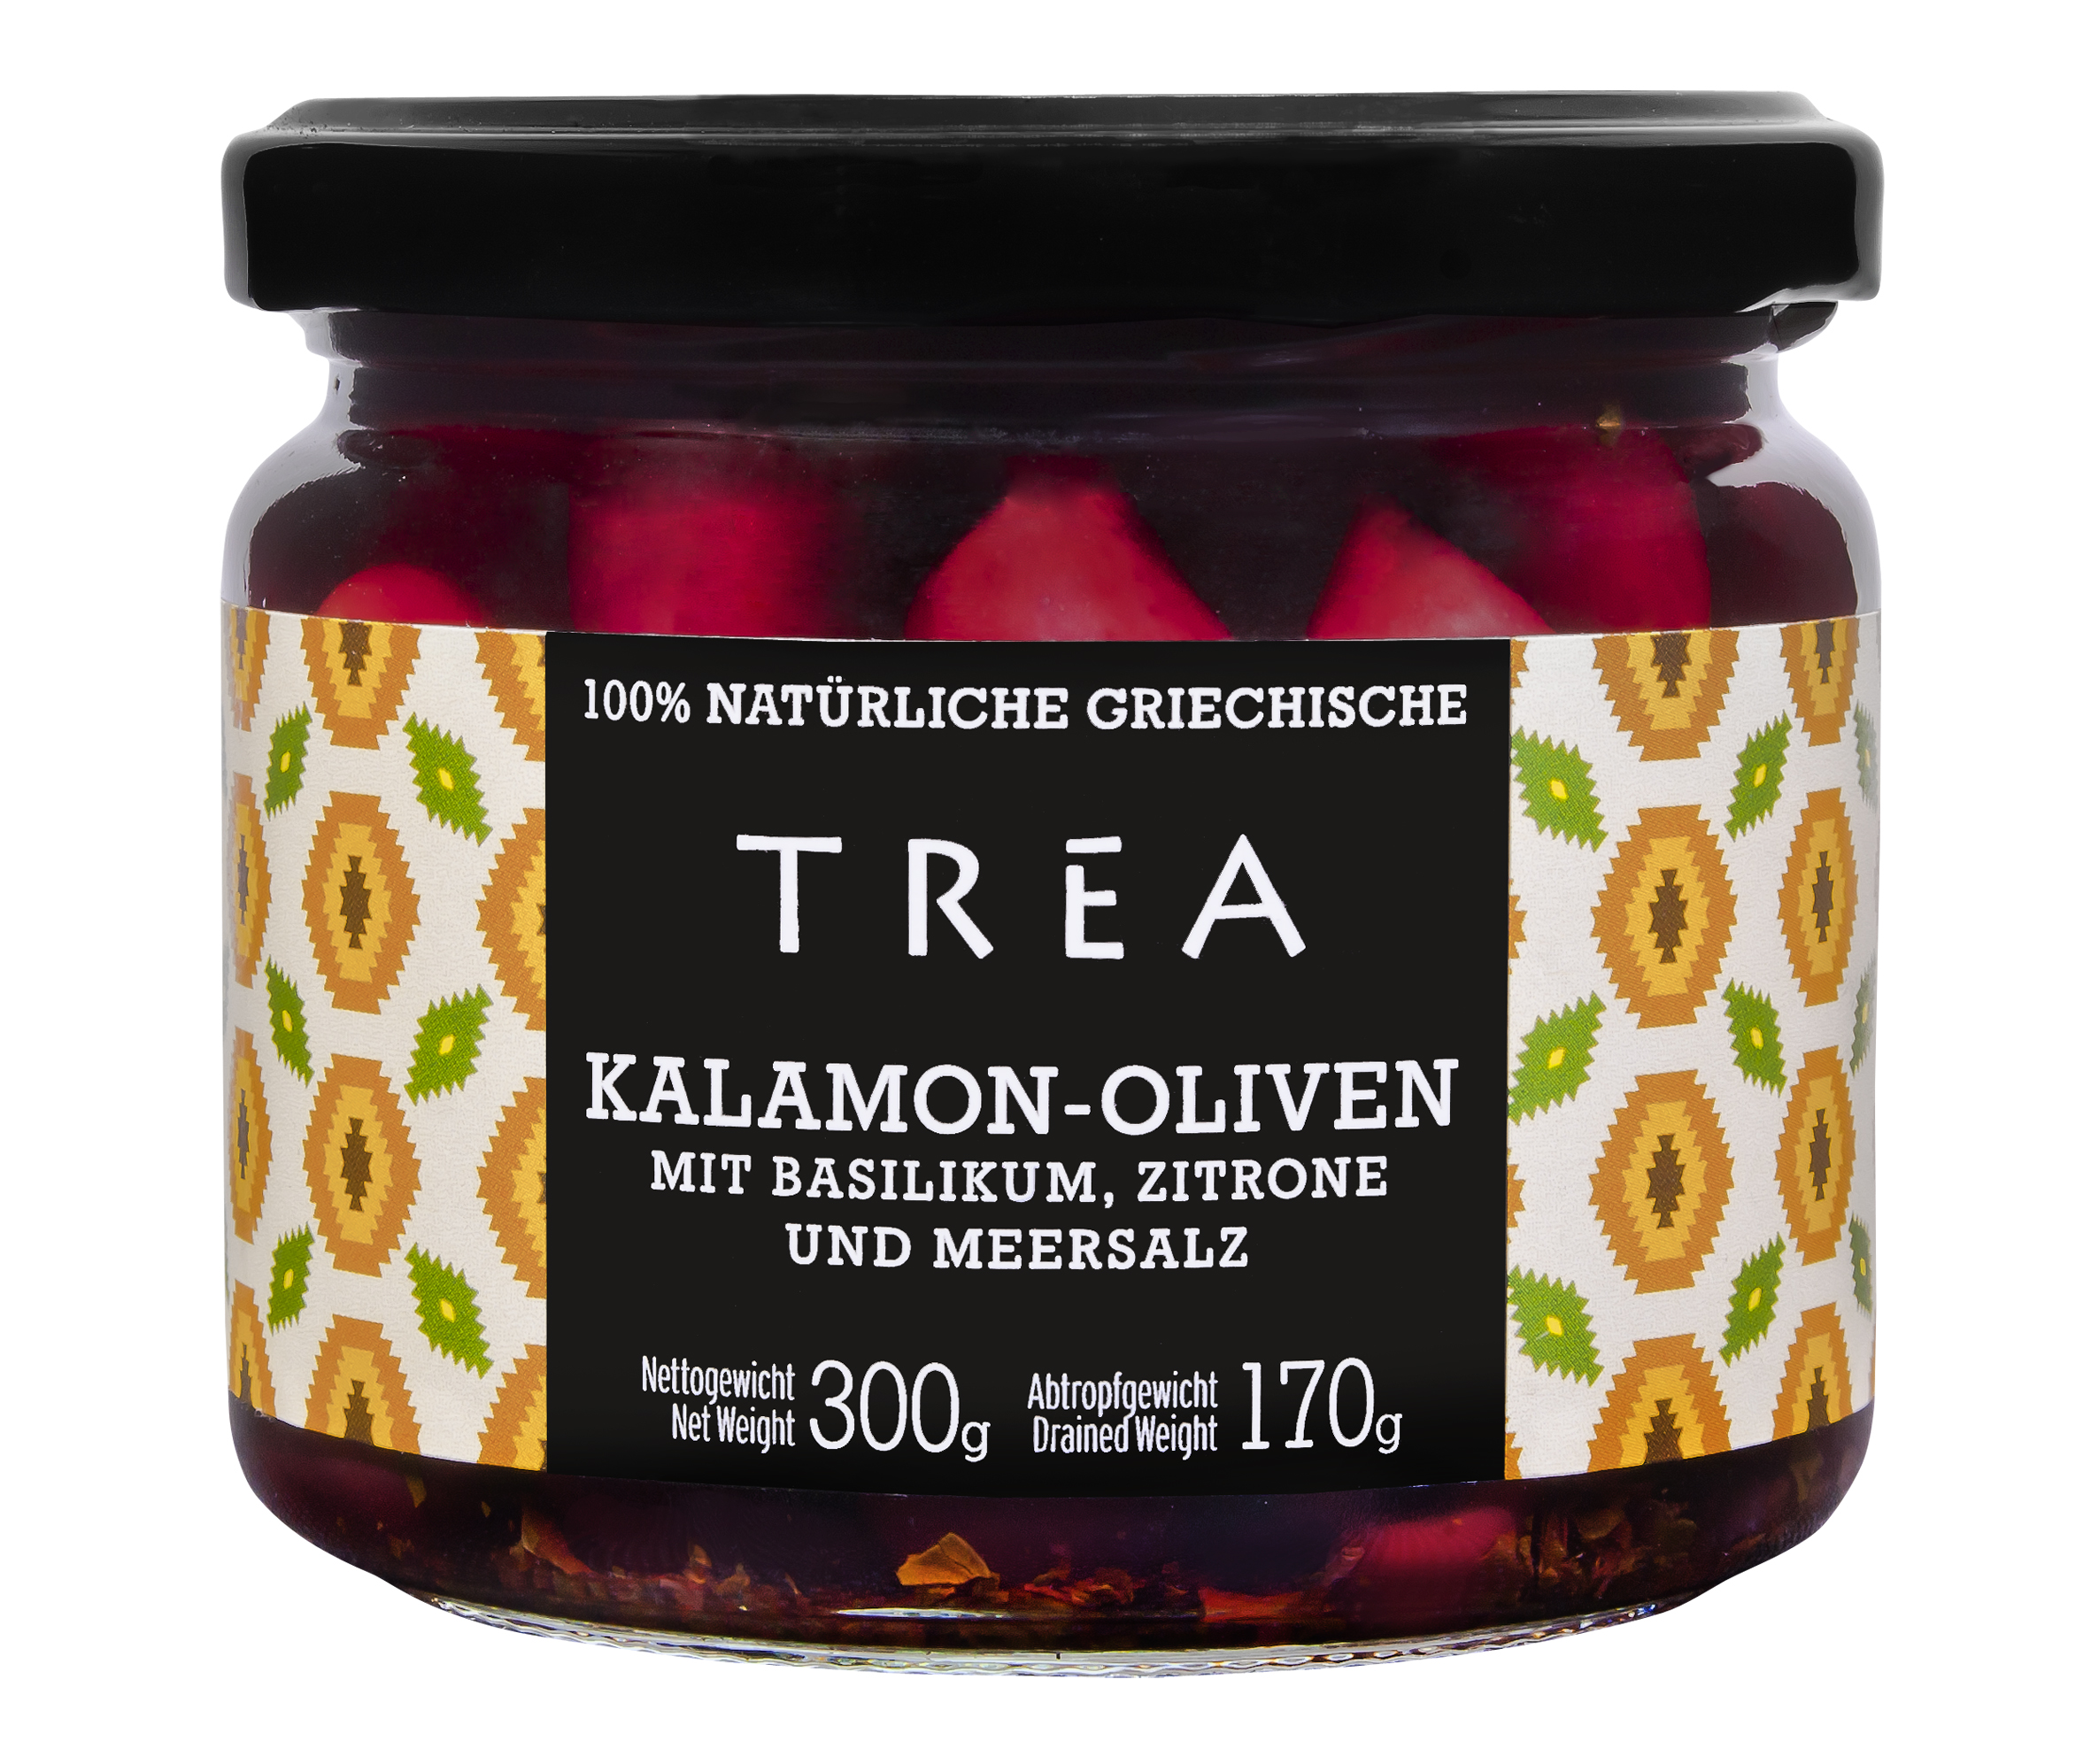 Kalamon- Oliven mit Basilikum und Zitrone, 300 g